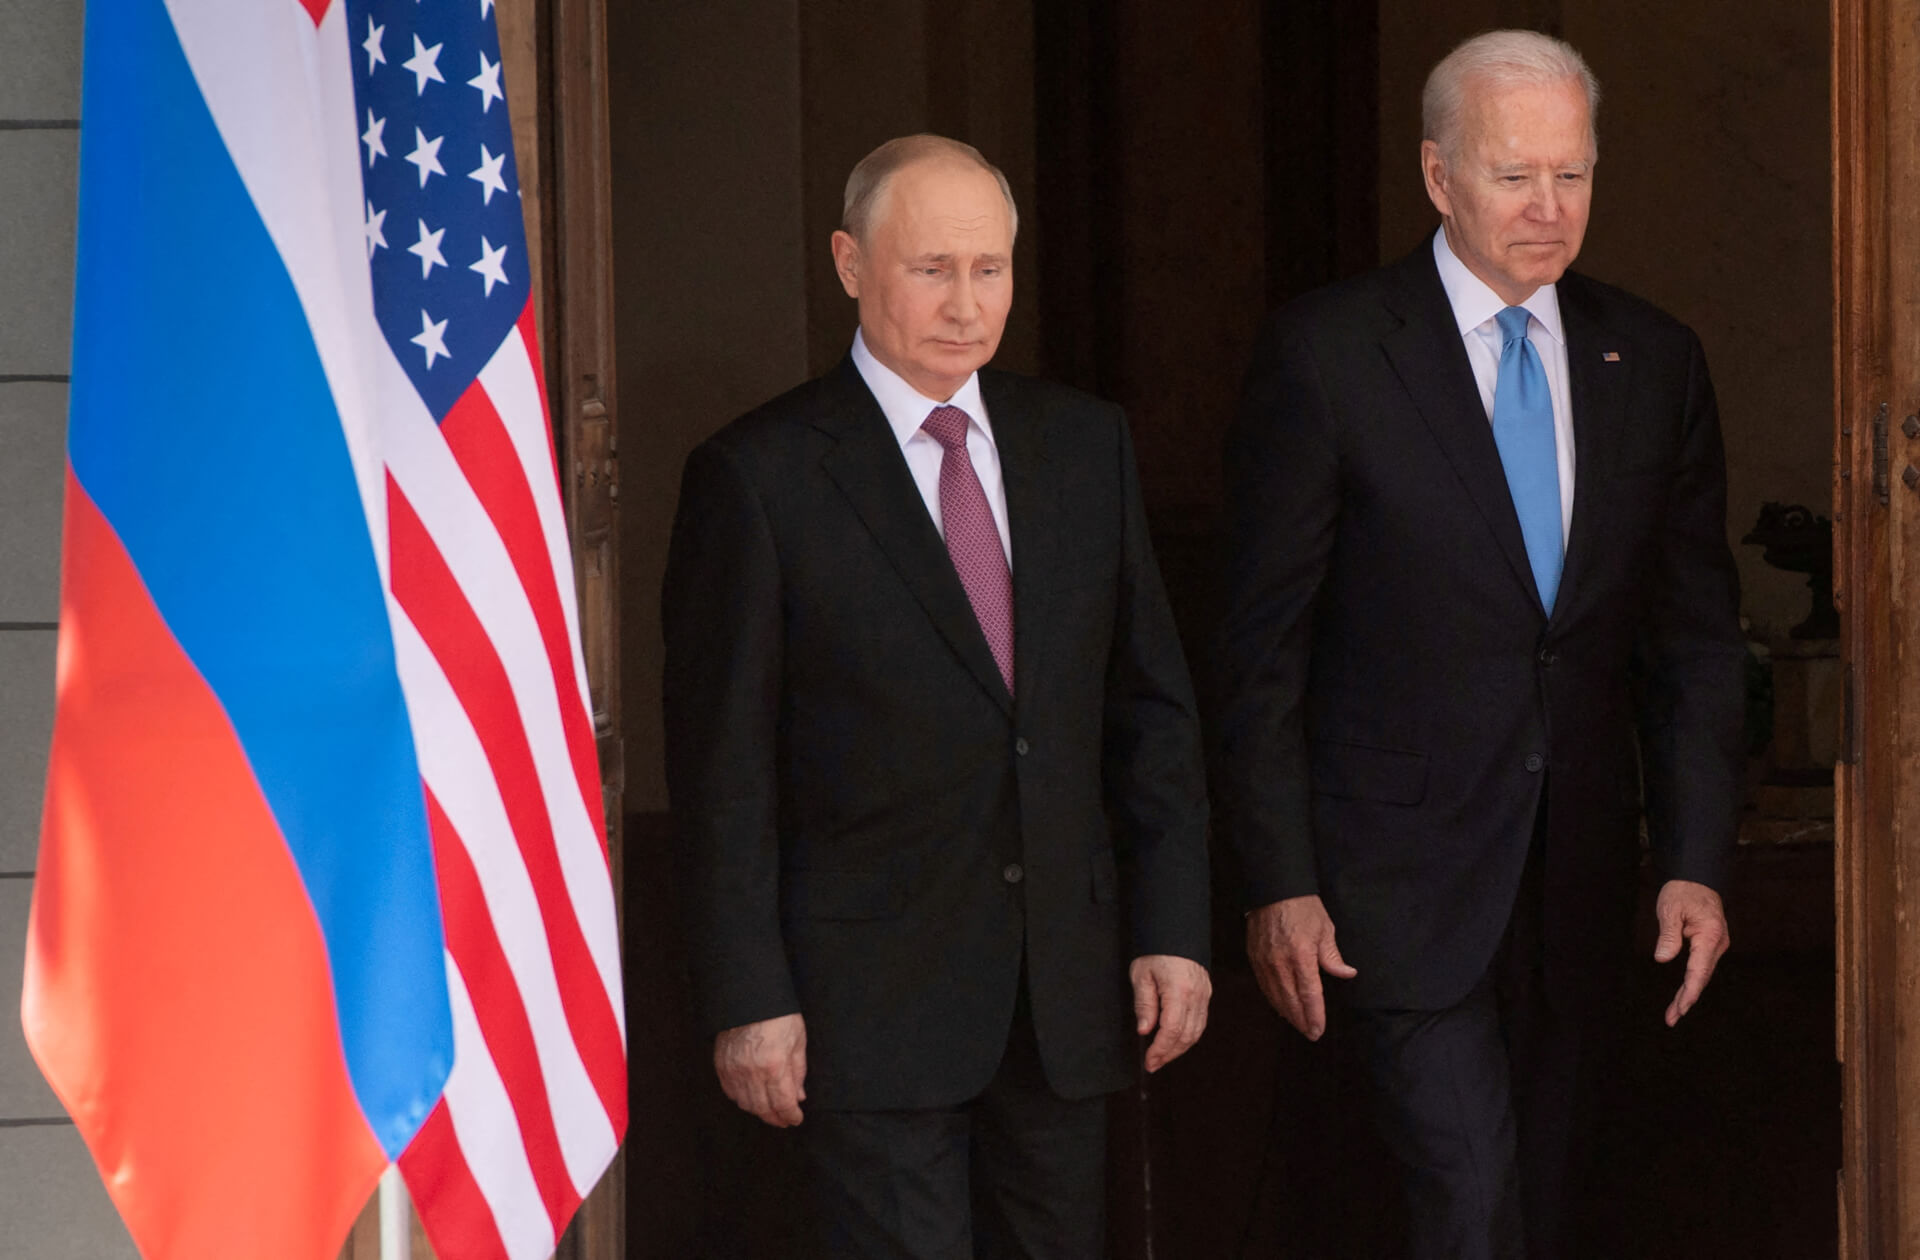 Biden Agrees to Meet Putin ‘In Principle’, Unless Russia Invades Ukraine